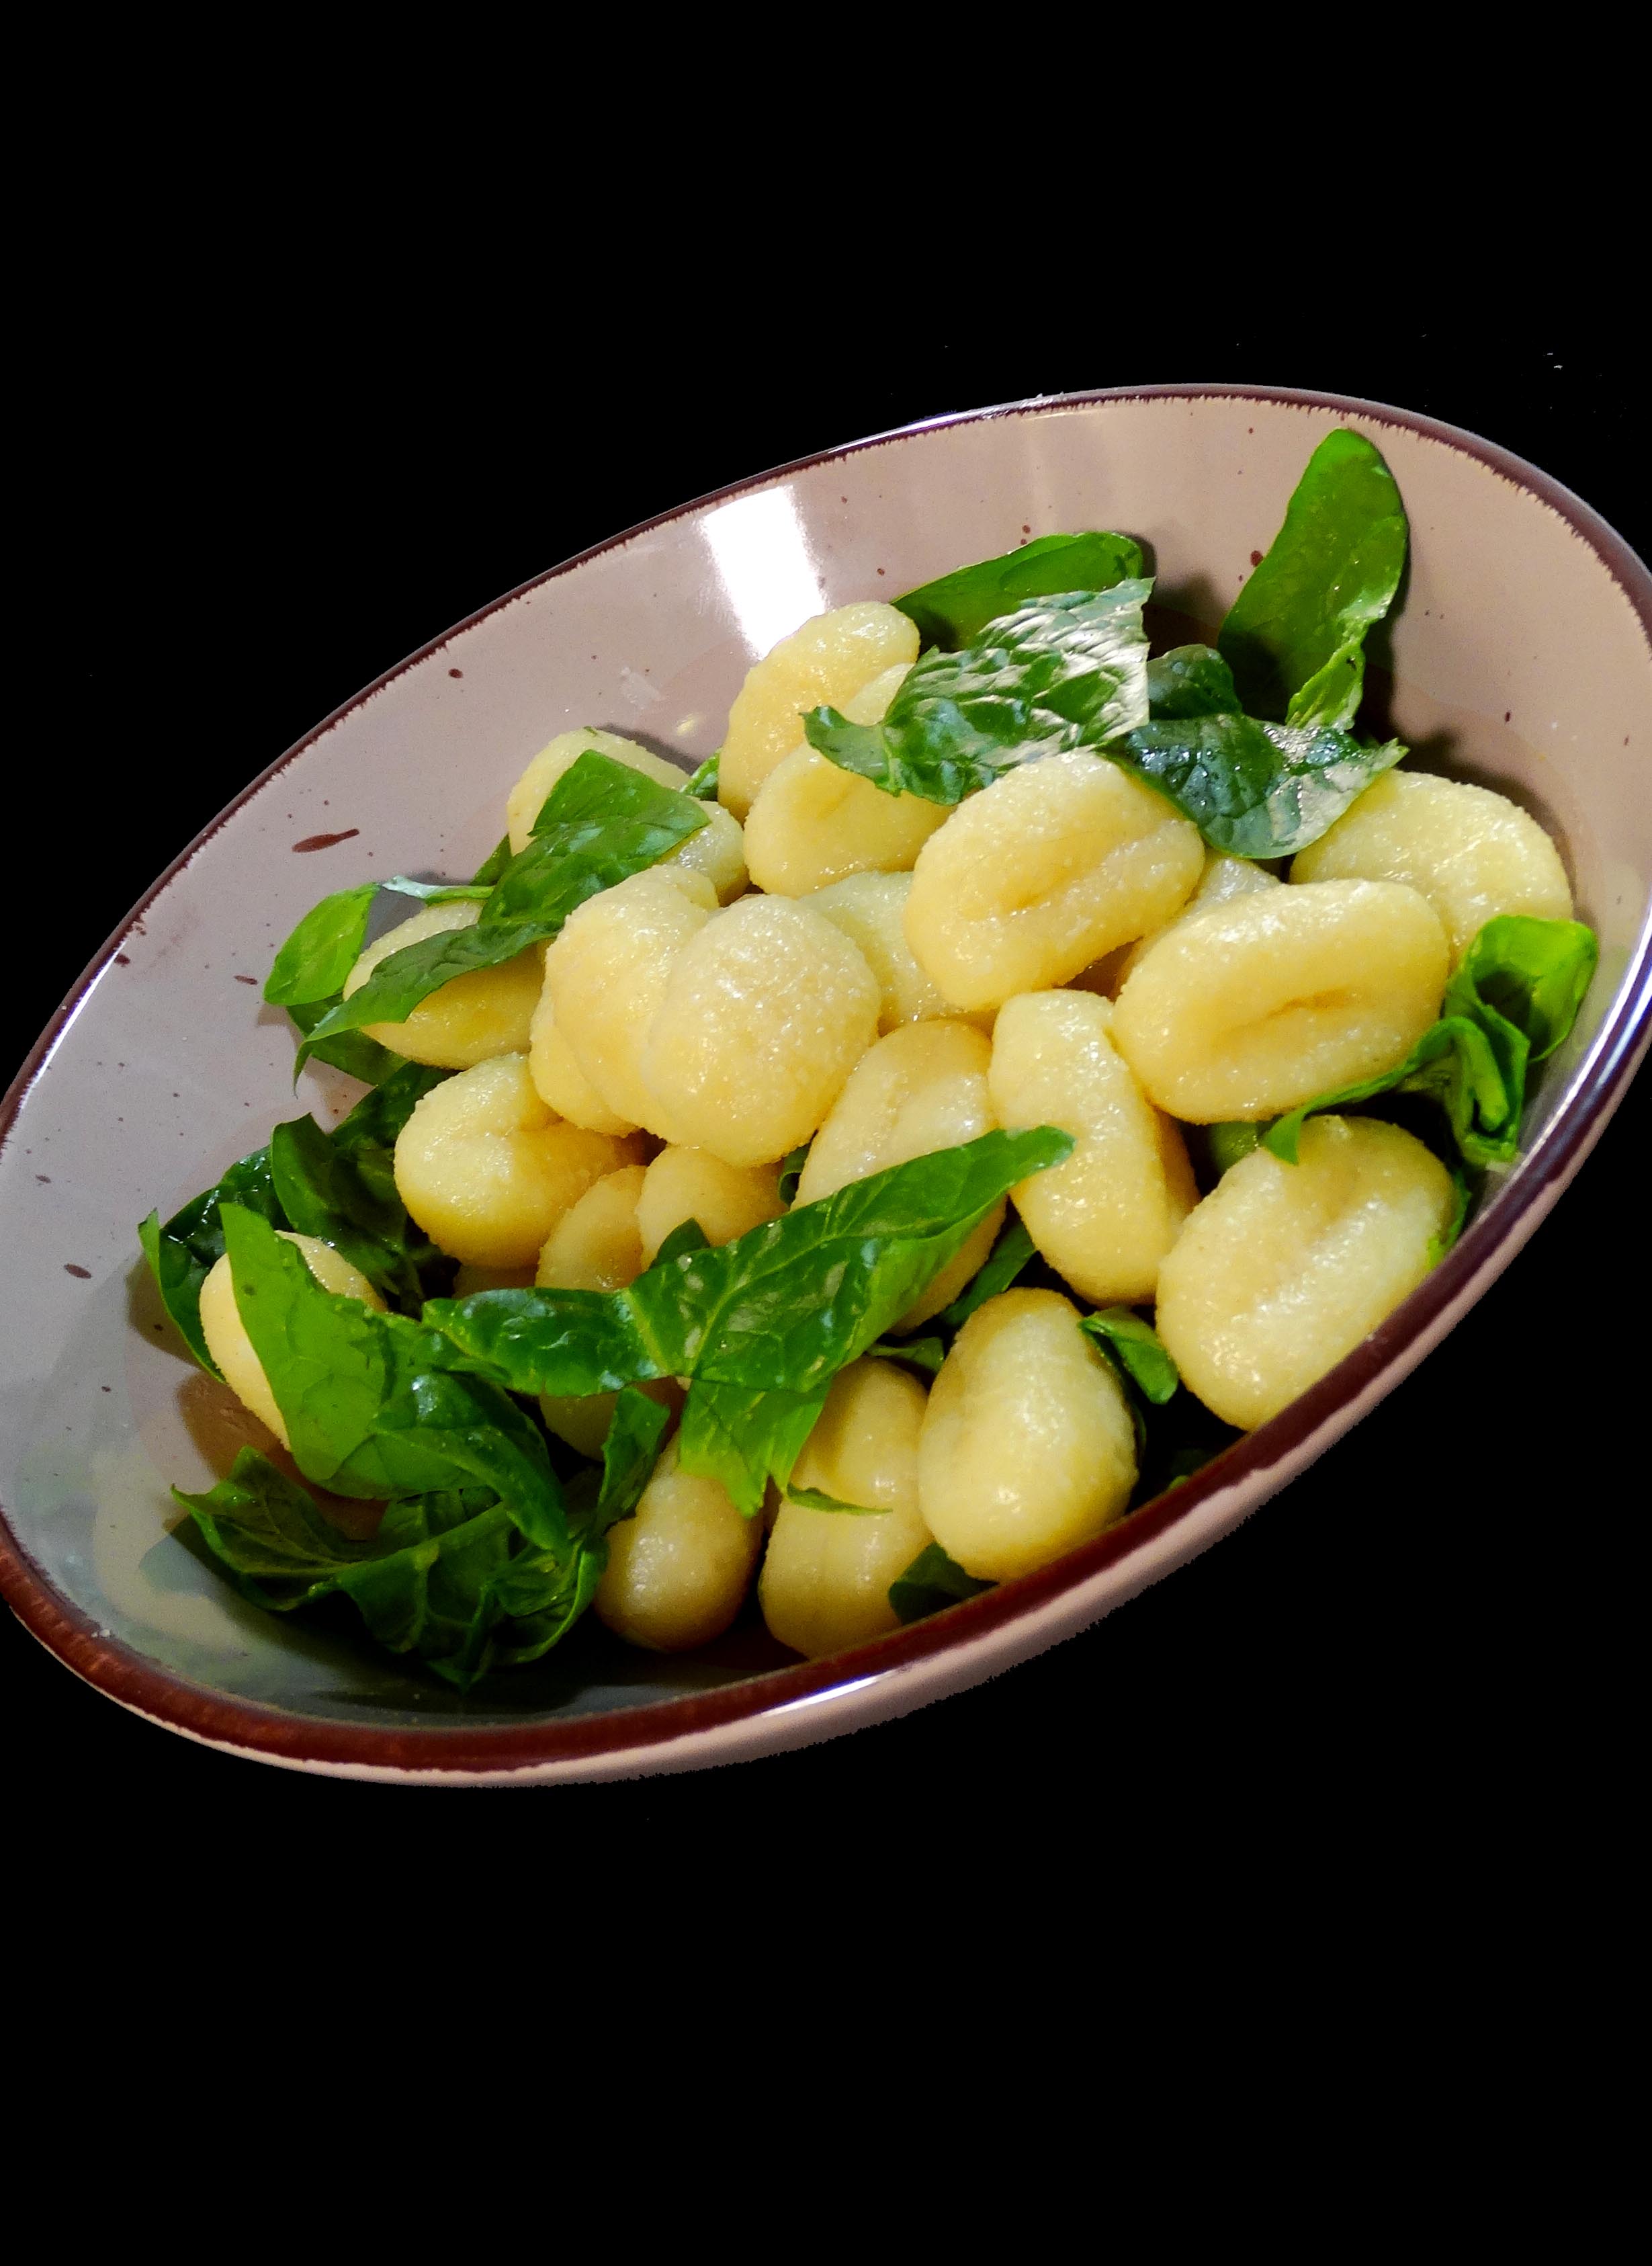 Teplý salát z bramborových noků a čerstvého špenátu